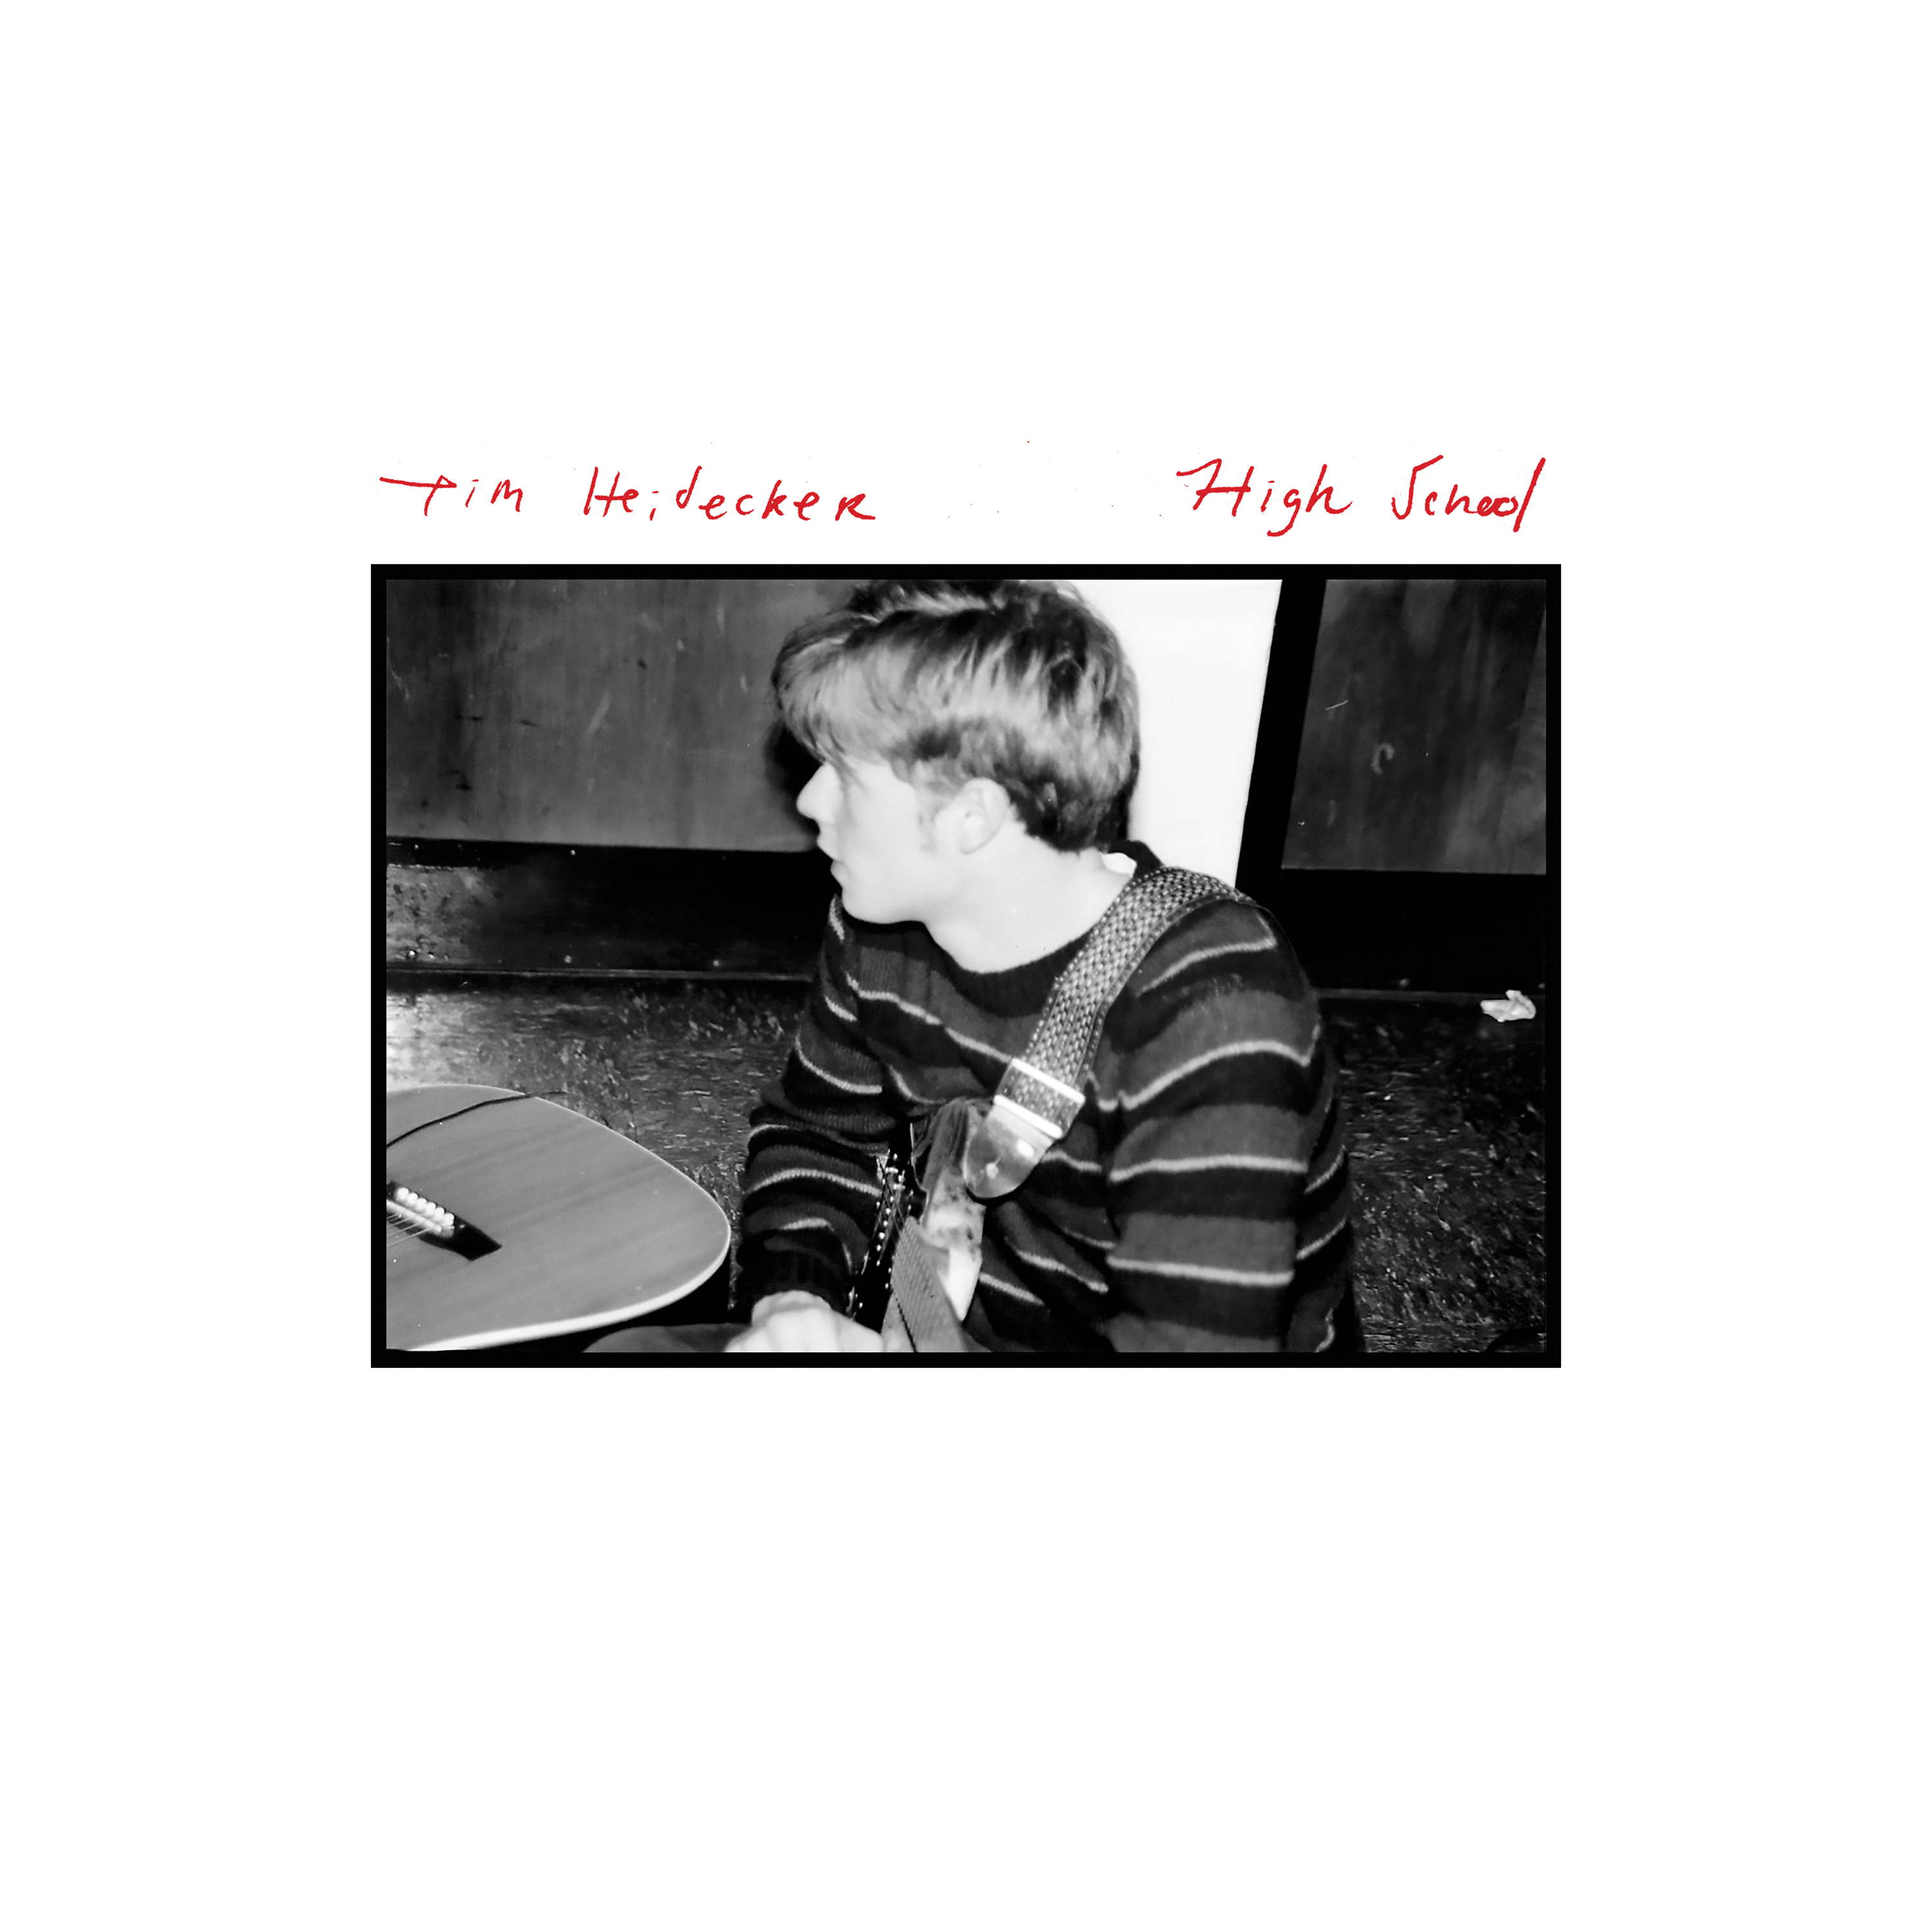 Tim Heidecker - High School - CD